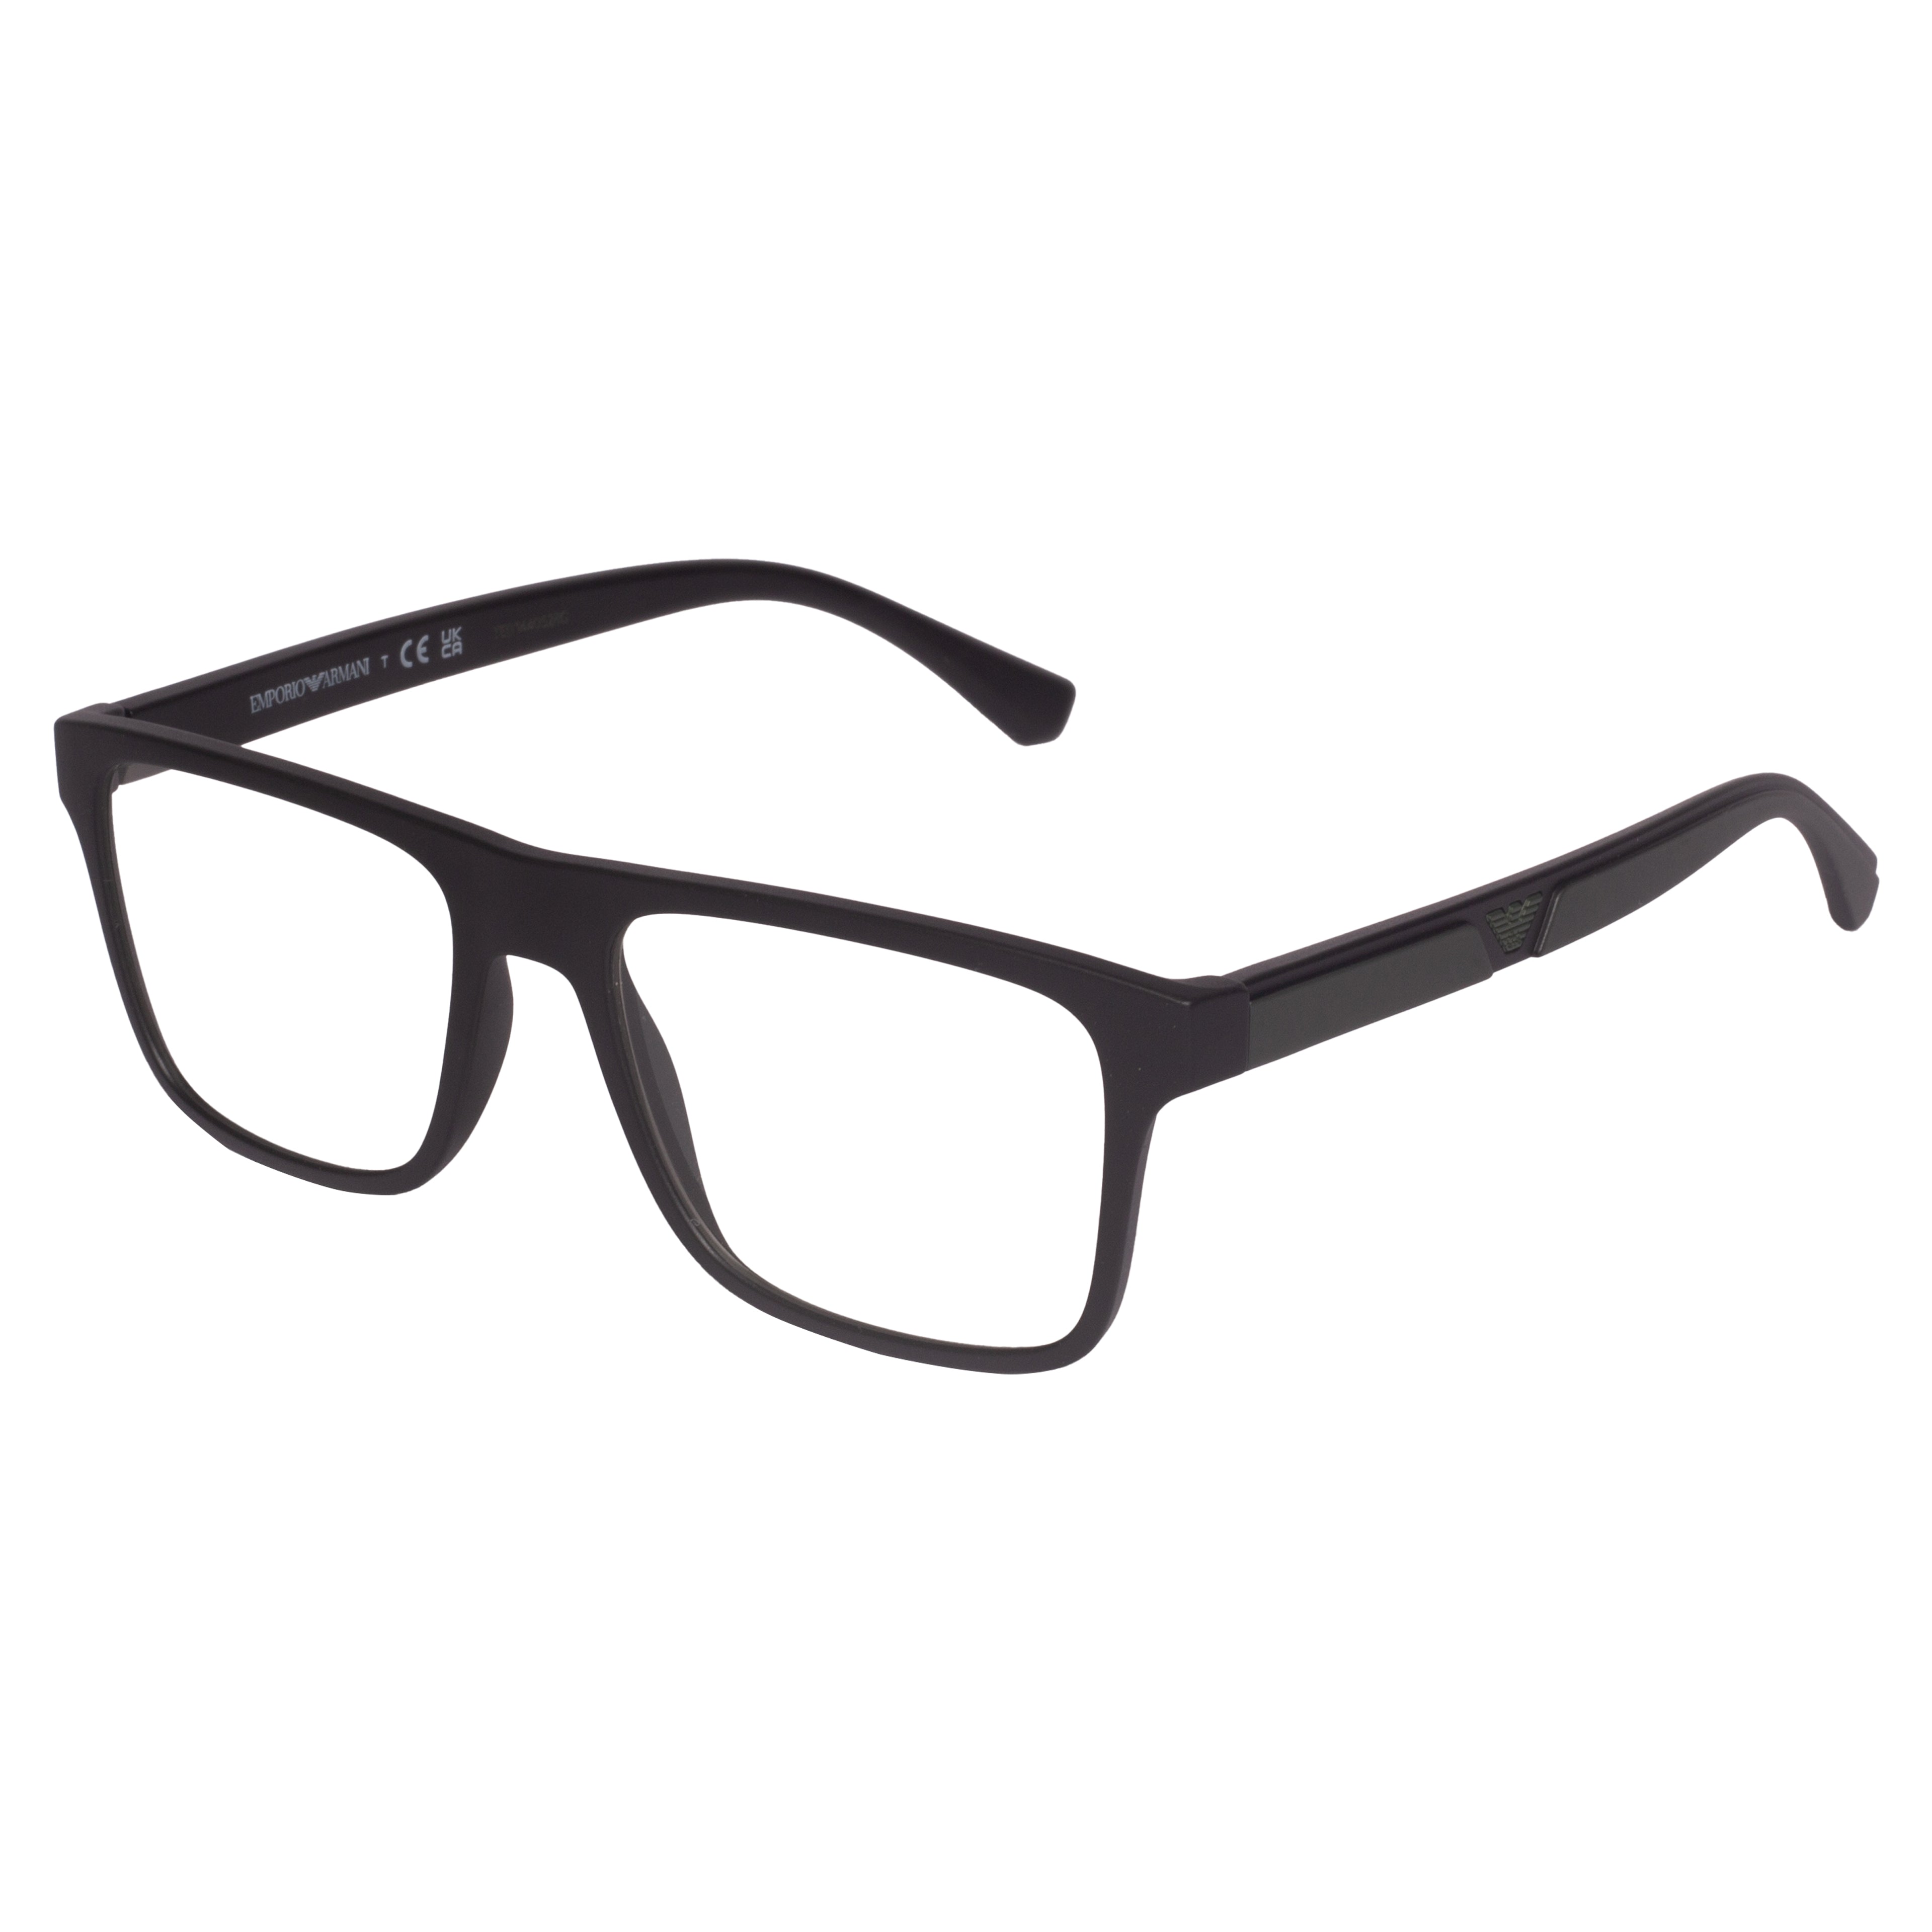 Rayban-RX7033-52-2000 Eyeglasses - Premium Eyeglasses from Rayban - Just Rs. 5190! Shop now at Laxmi Opticians